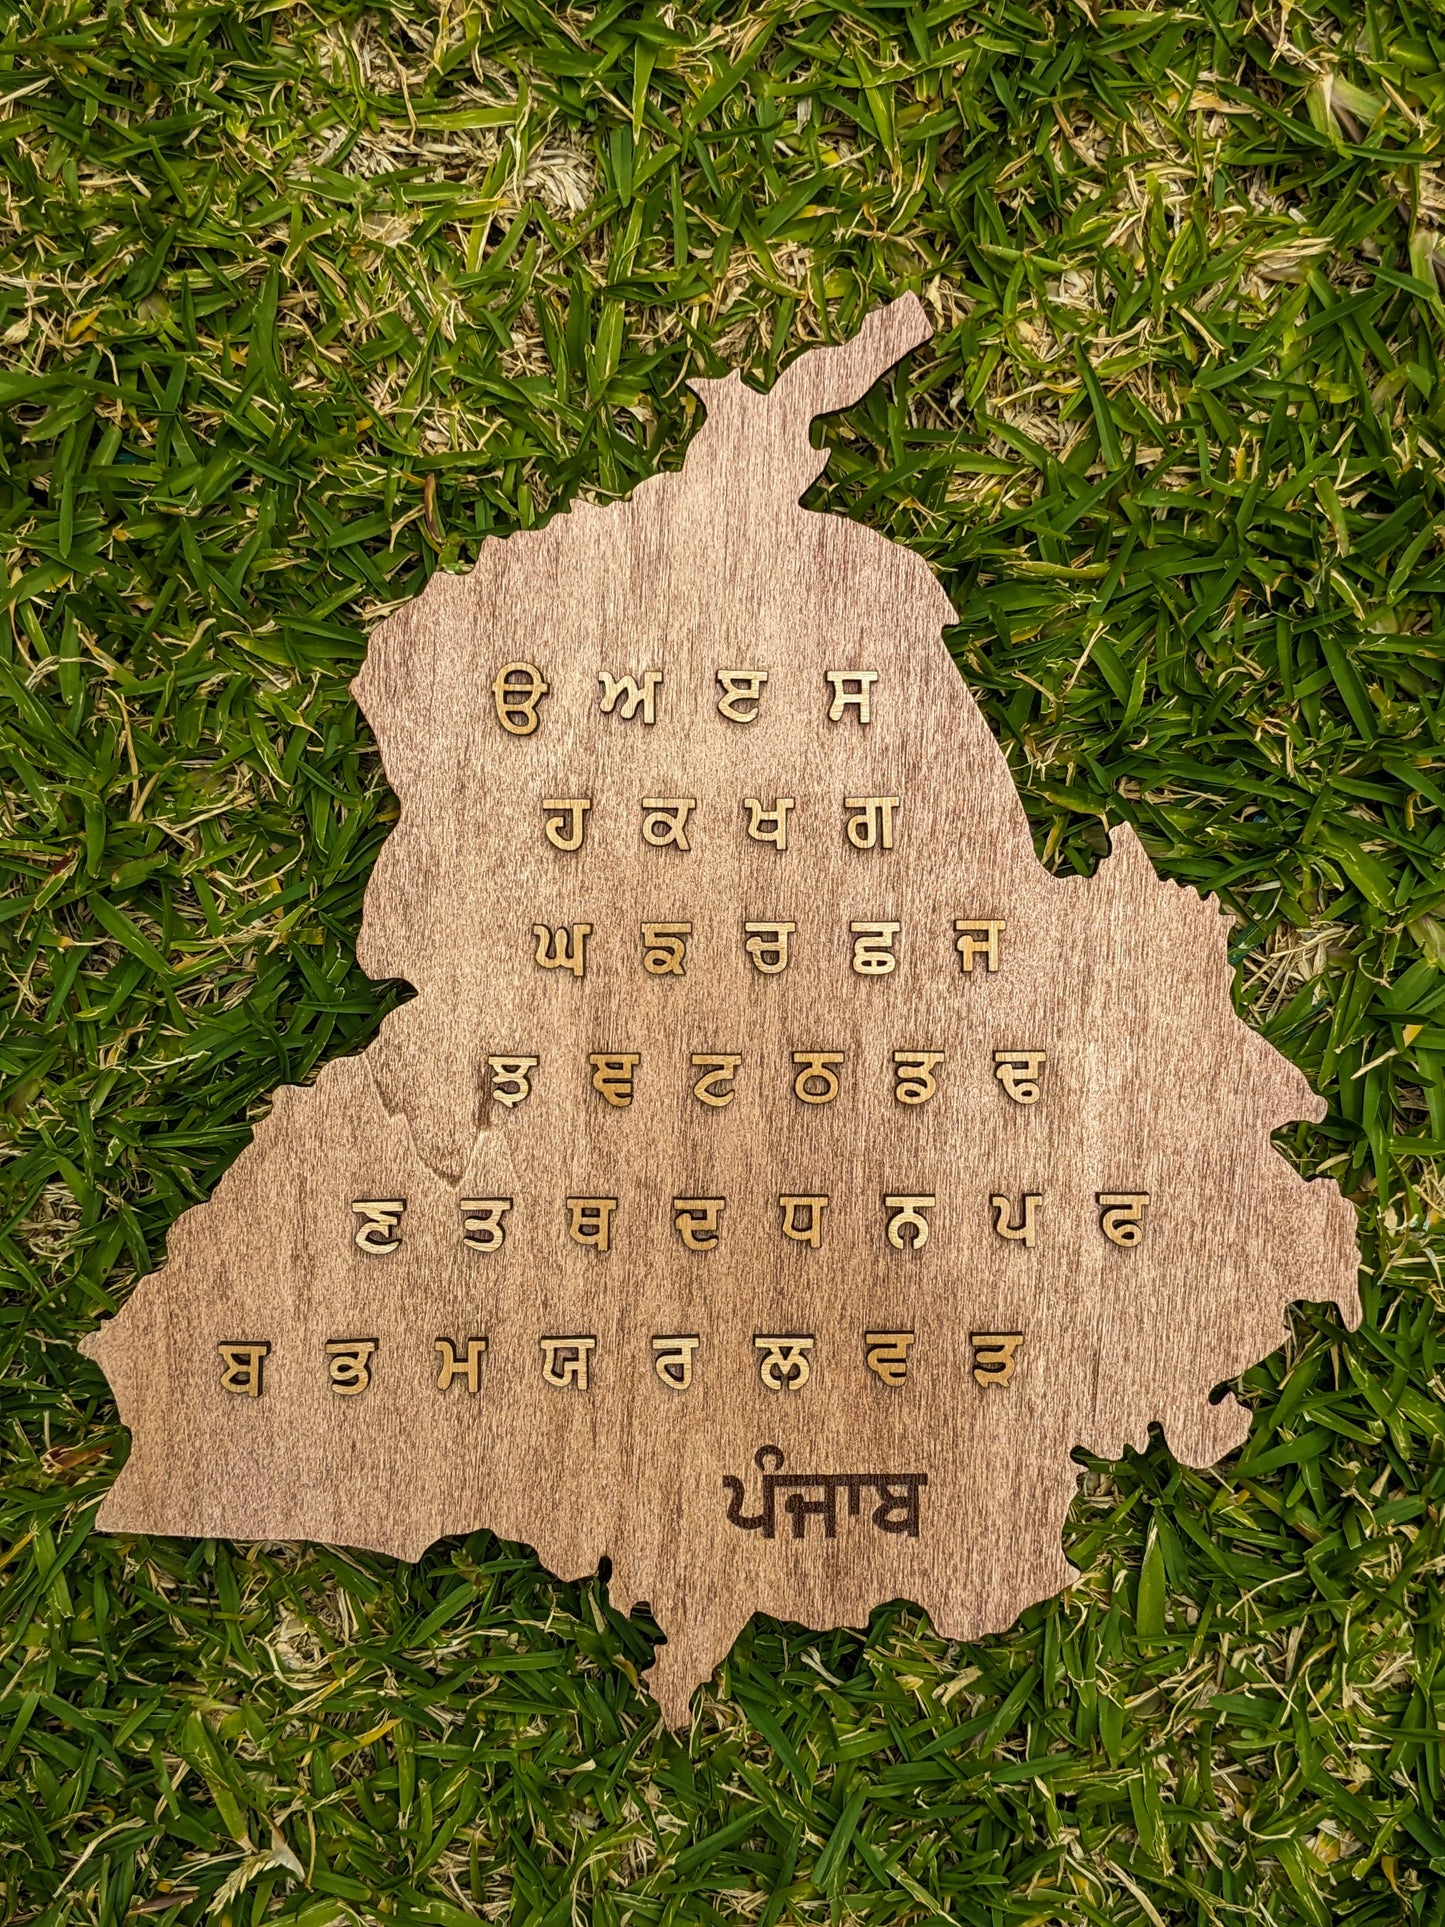 
                  
                    Punjab Map with Punjabi Alphabet - The Charred Plank
                  
                